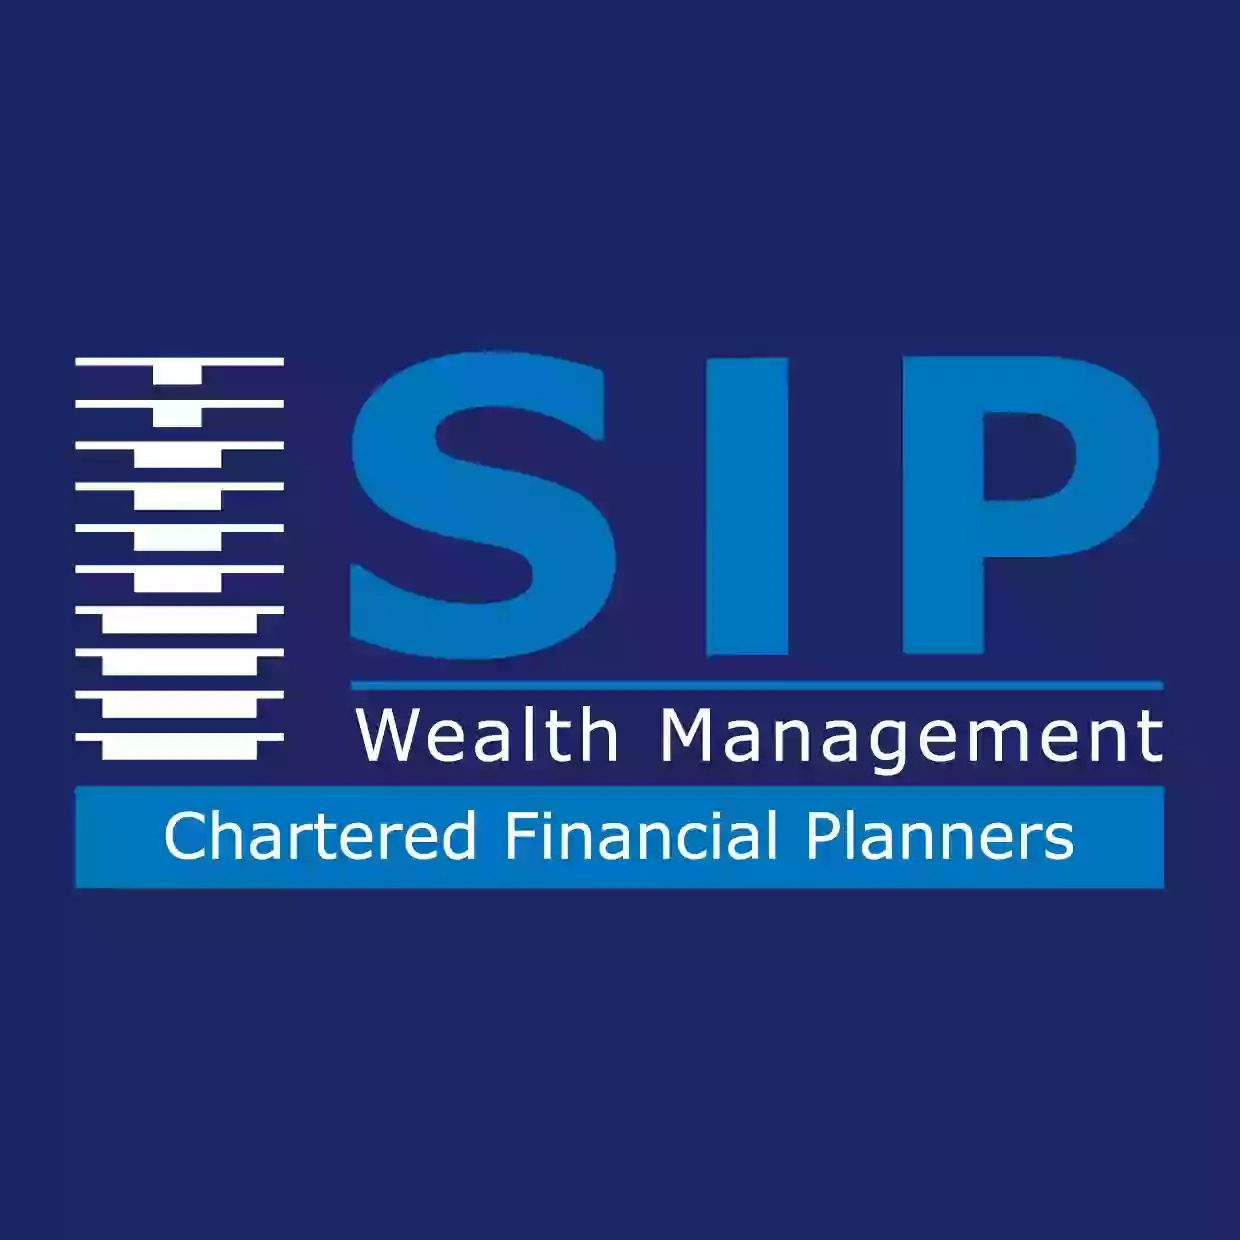 SIP Wealth Management